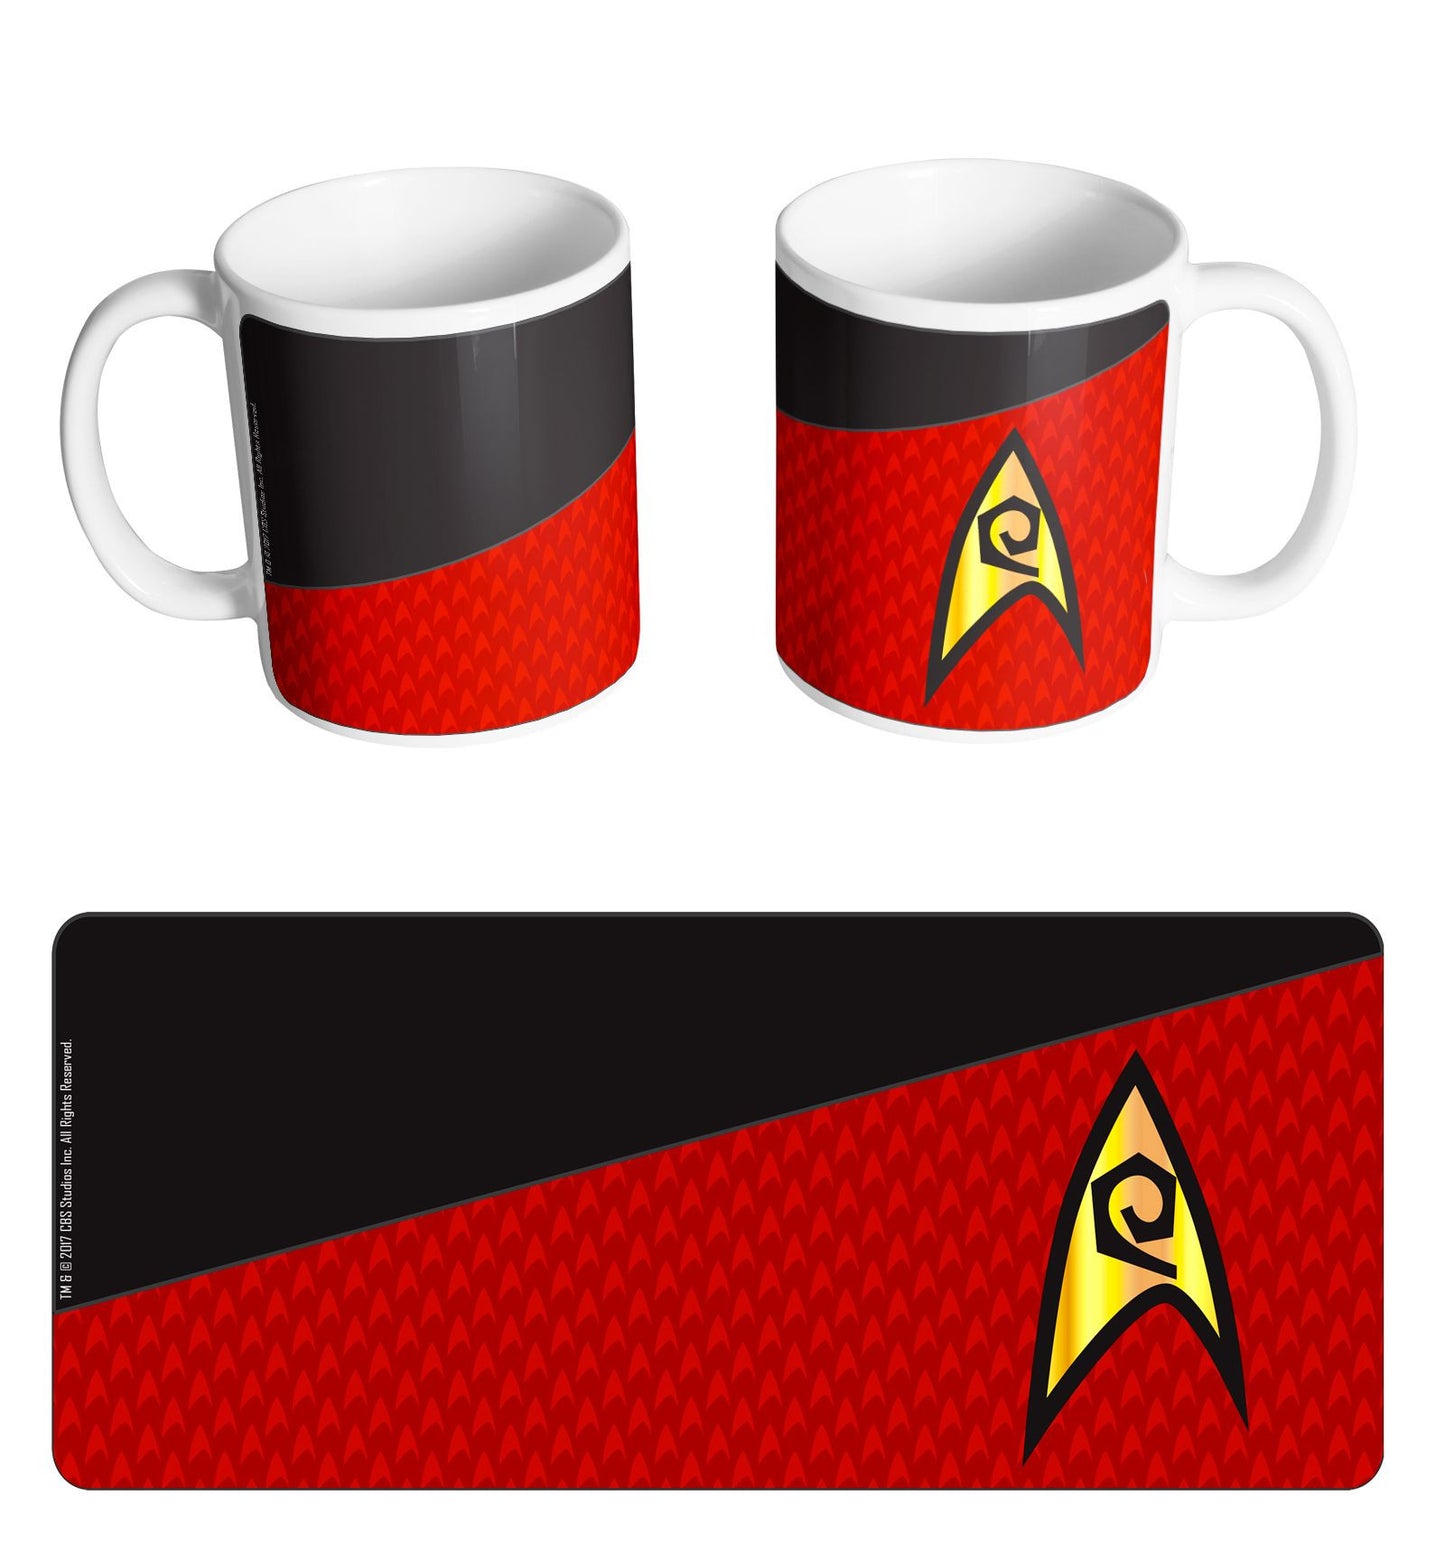 Mug Star Trek - Rouge Costume